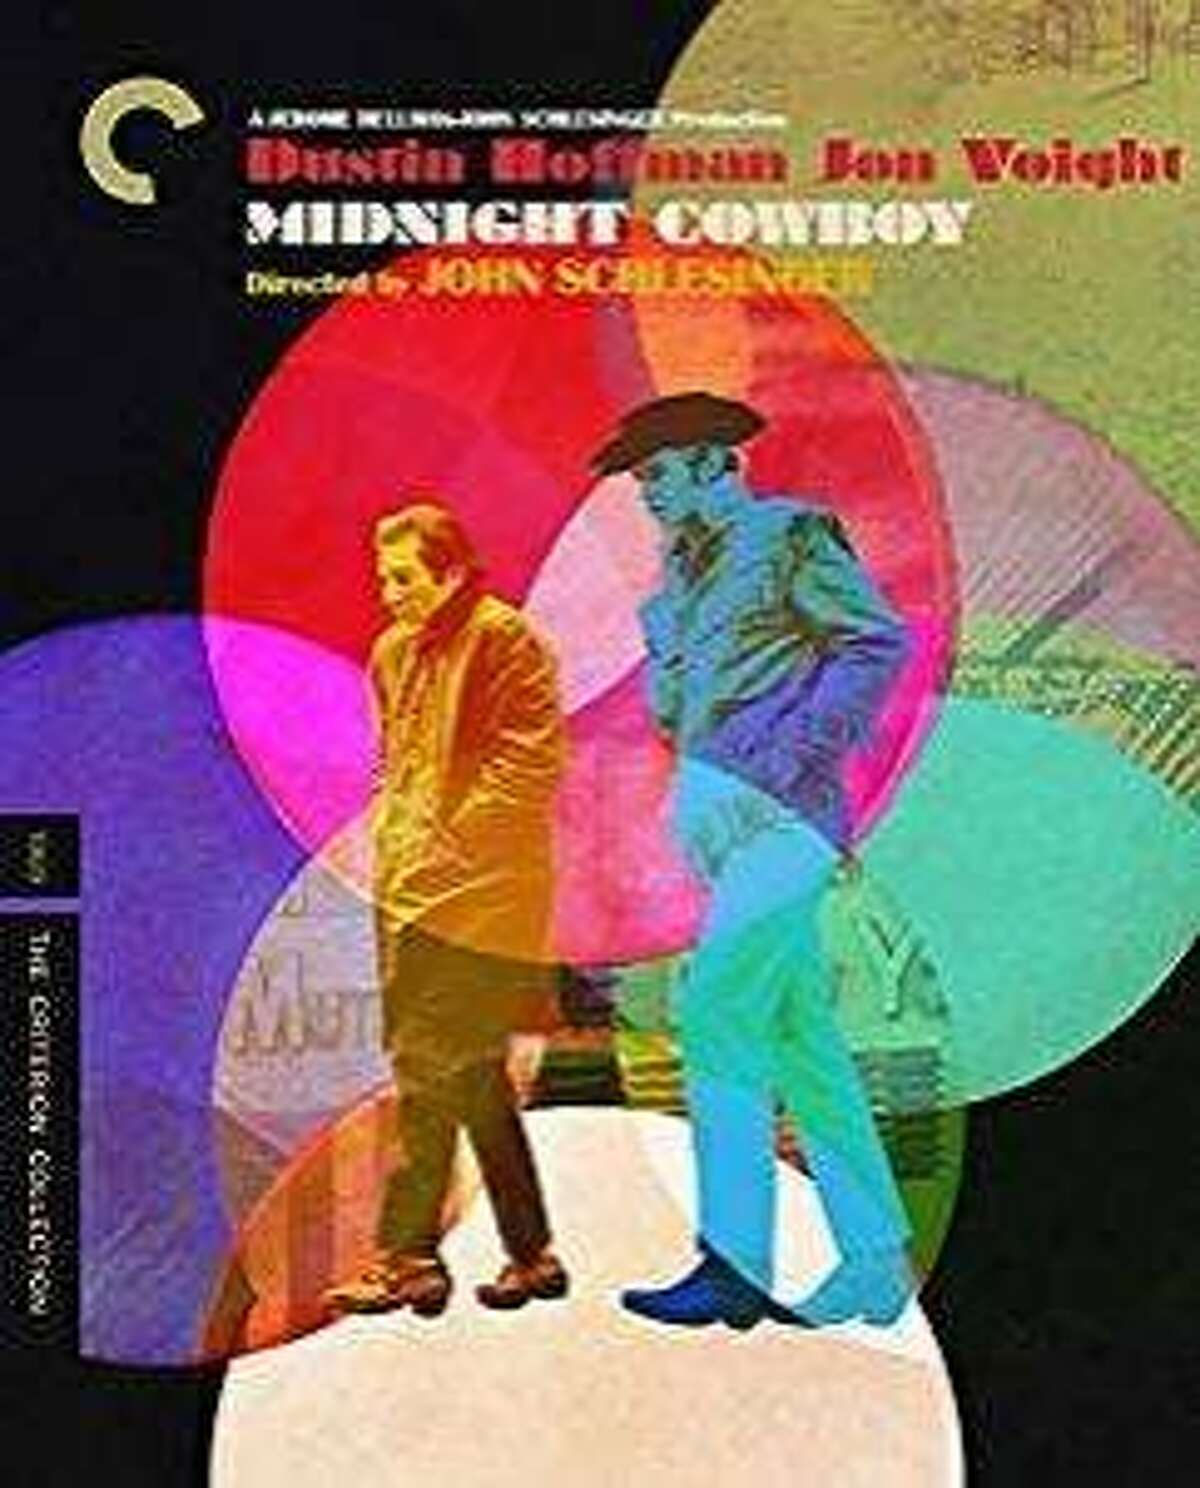 Blu-ray cover: "Midnight Cowboy"